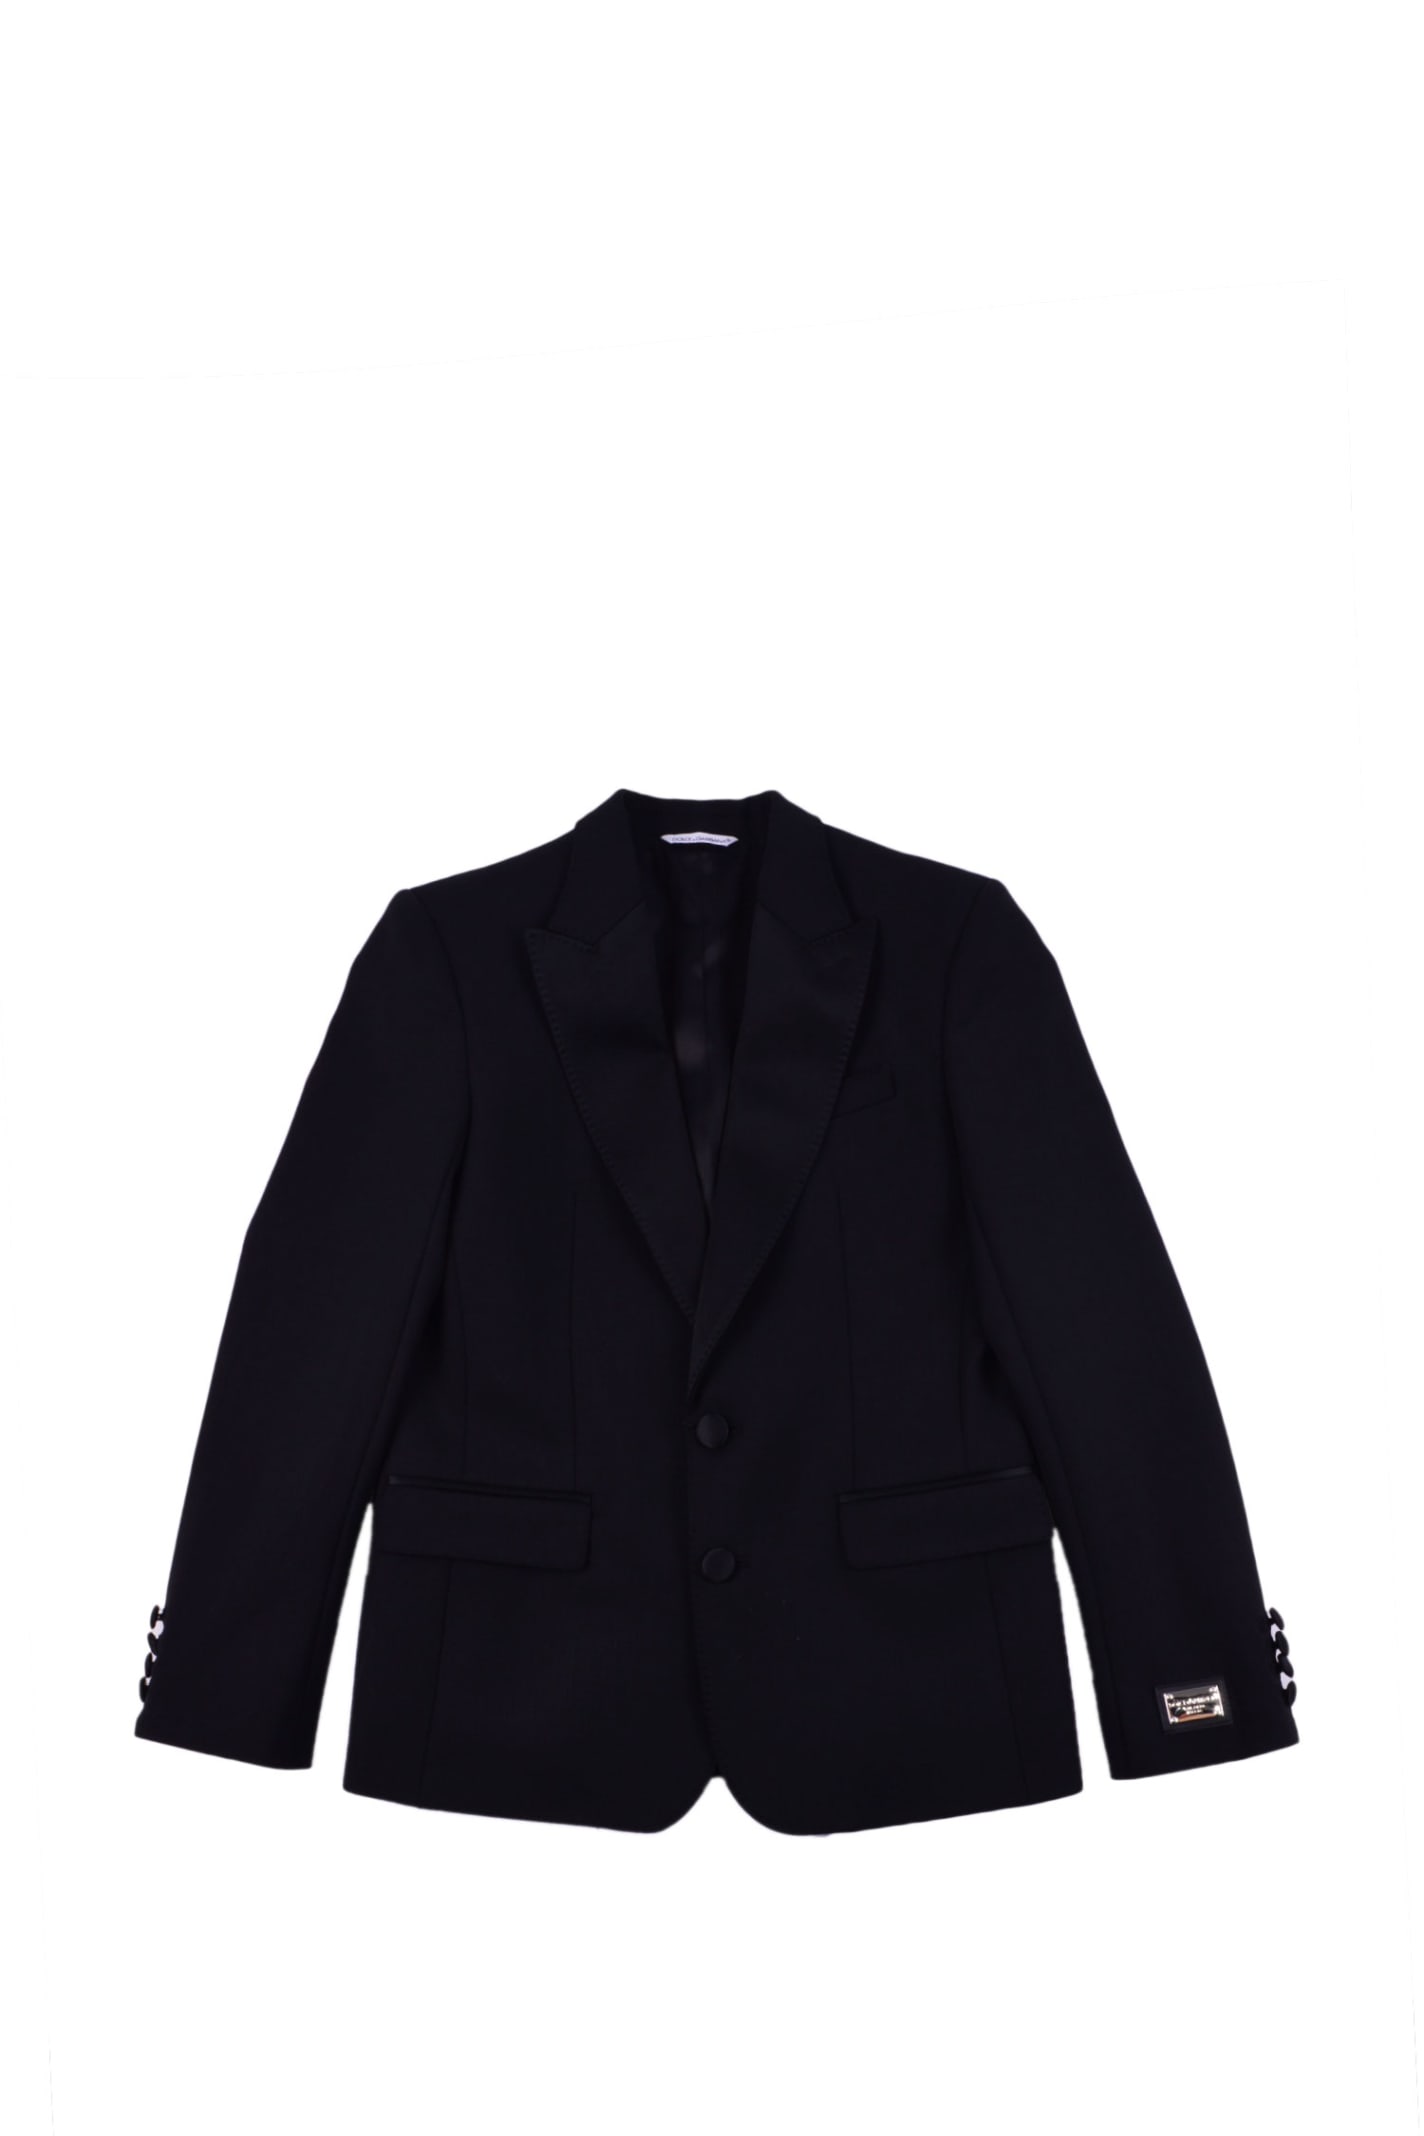 Dolce & Gabbana Single Breasted Jacket